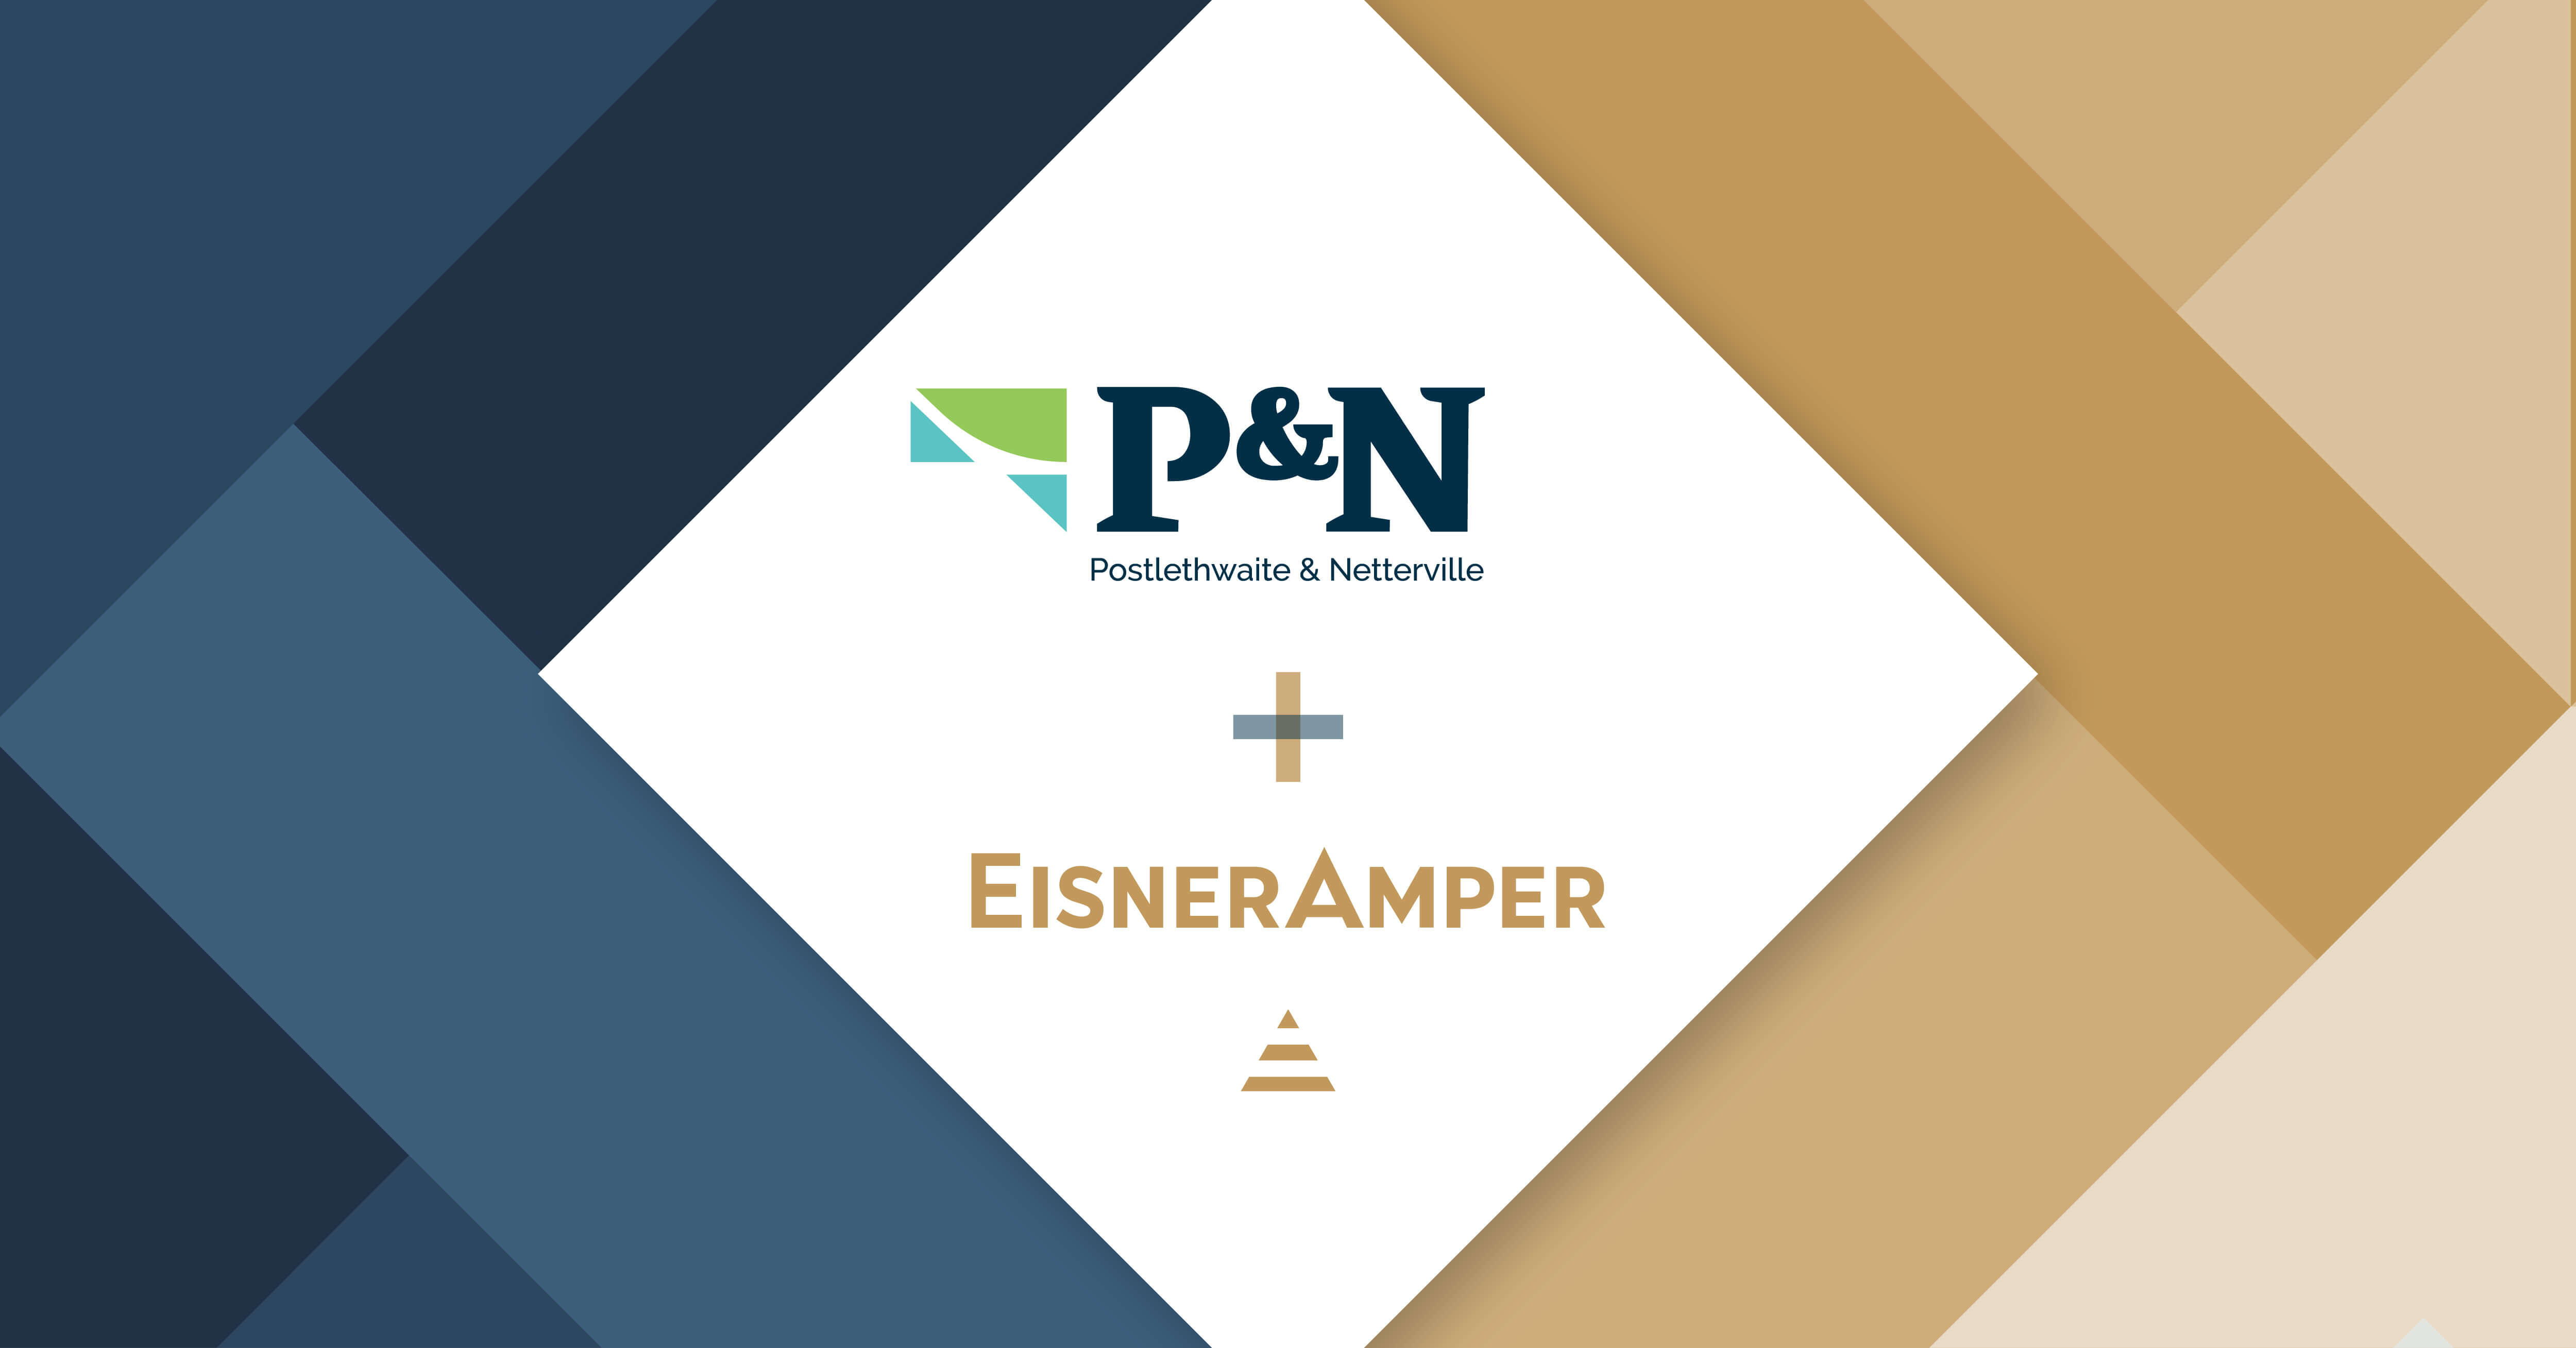 P&N combines with EisnerAmper